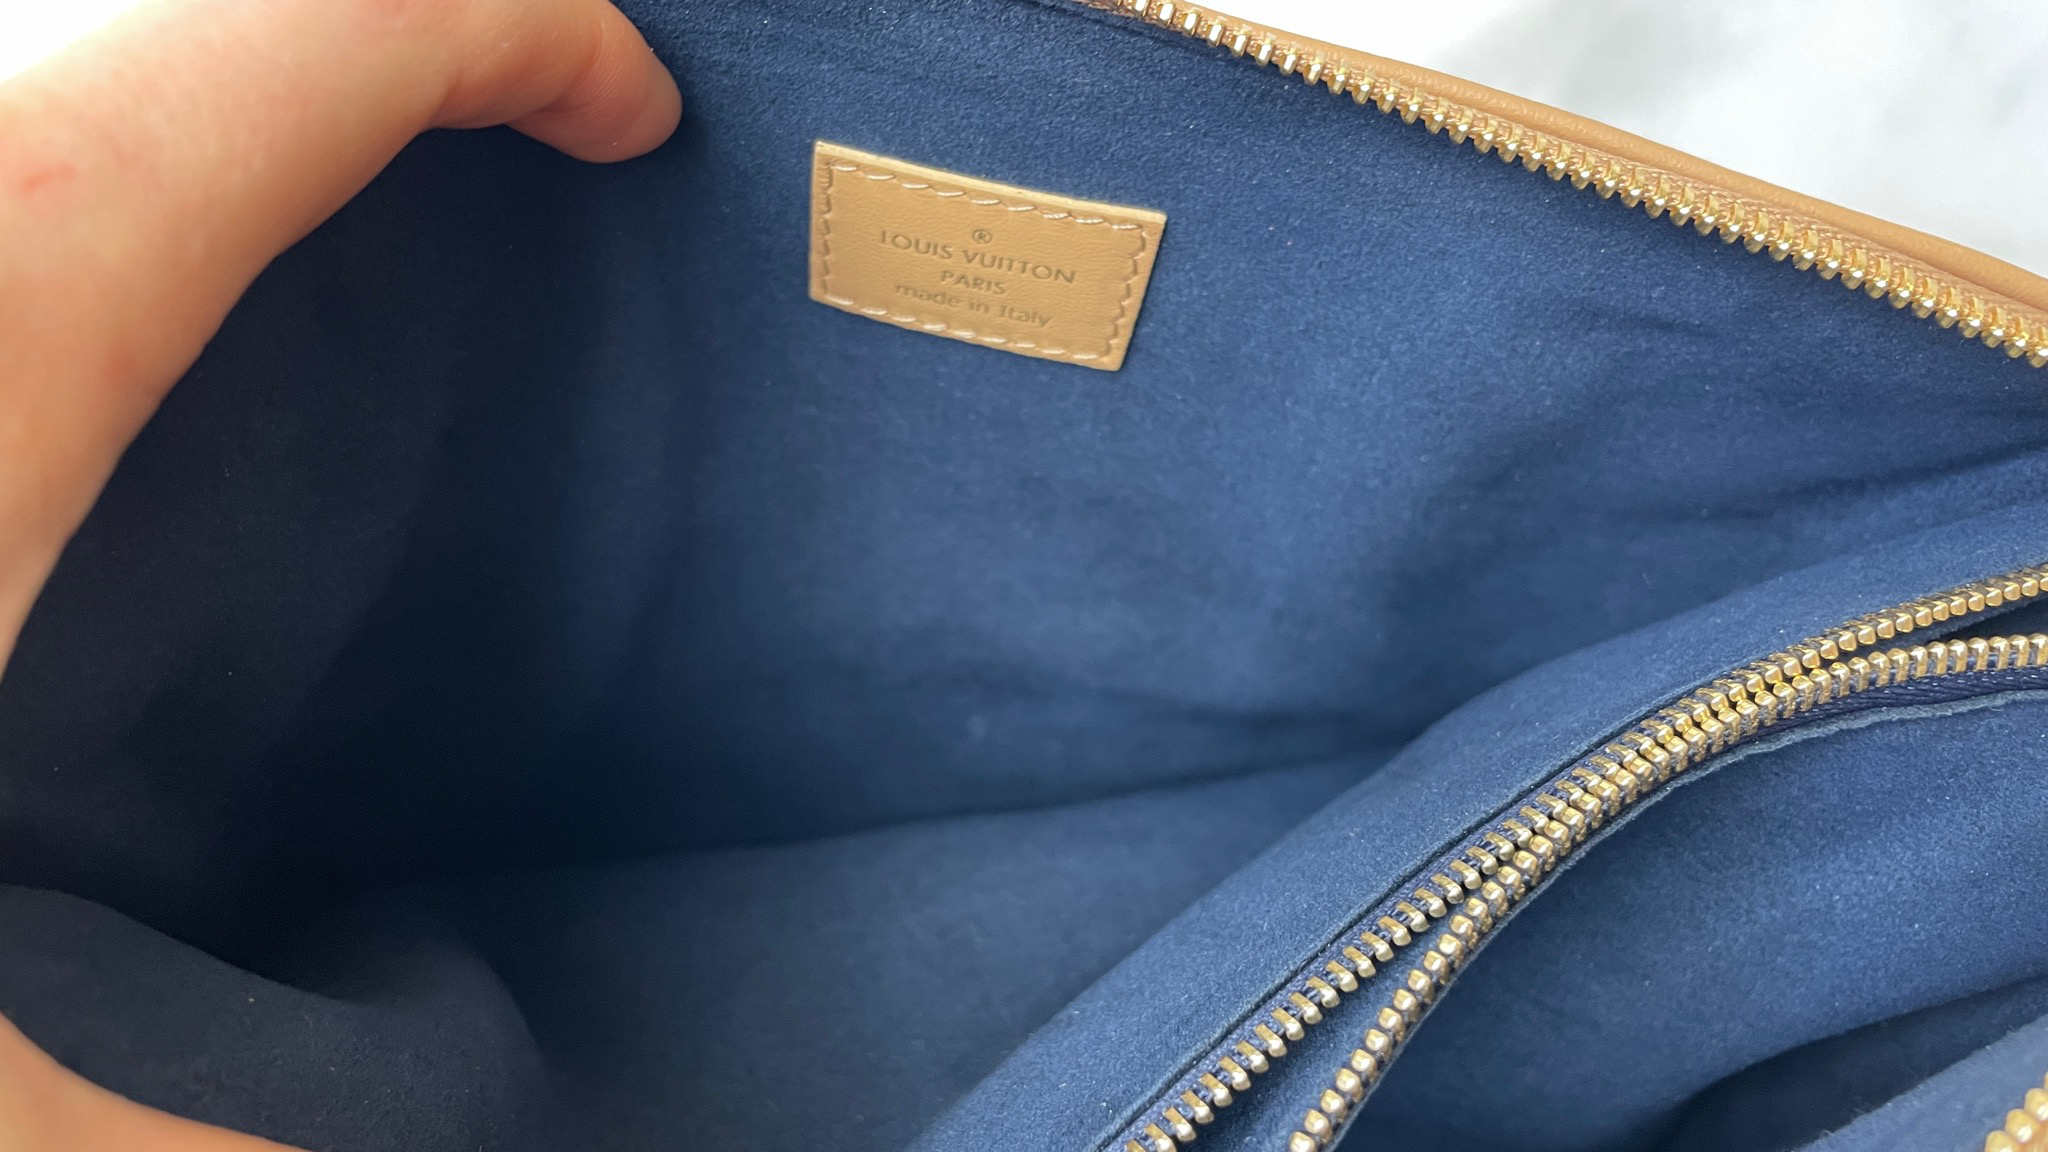 Louis Vuitton's Coussin PM Now Comes In Bleu Glacier And Camel